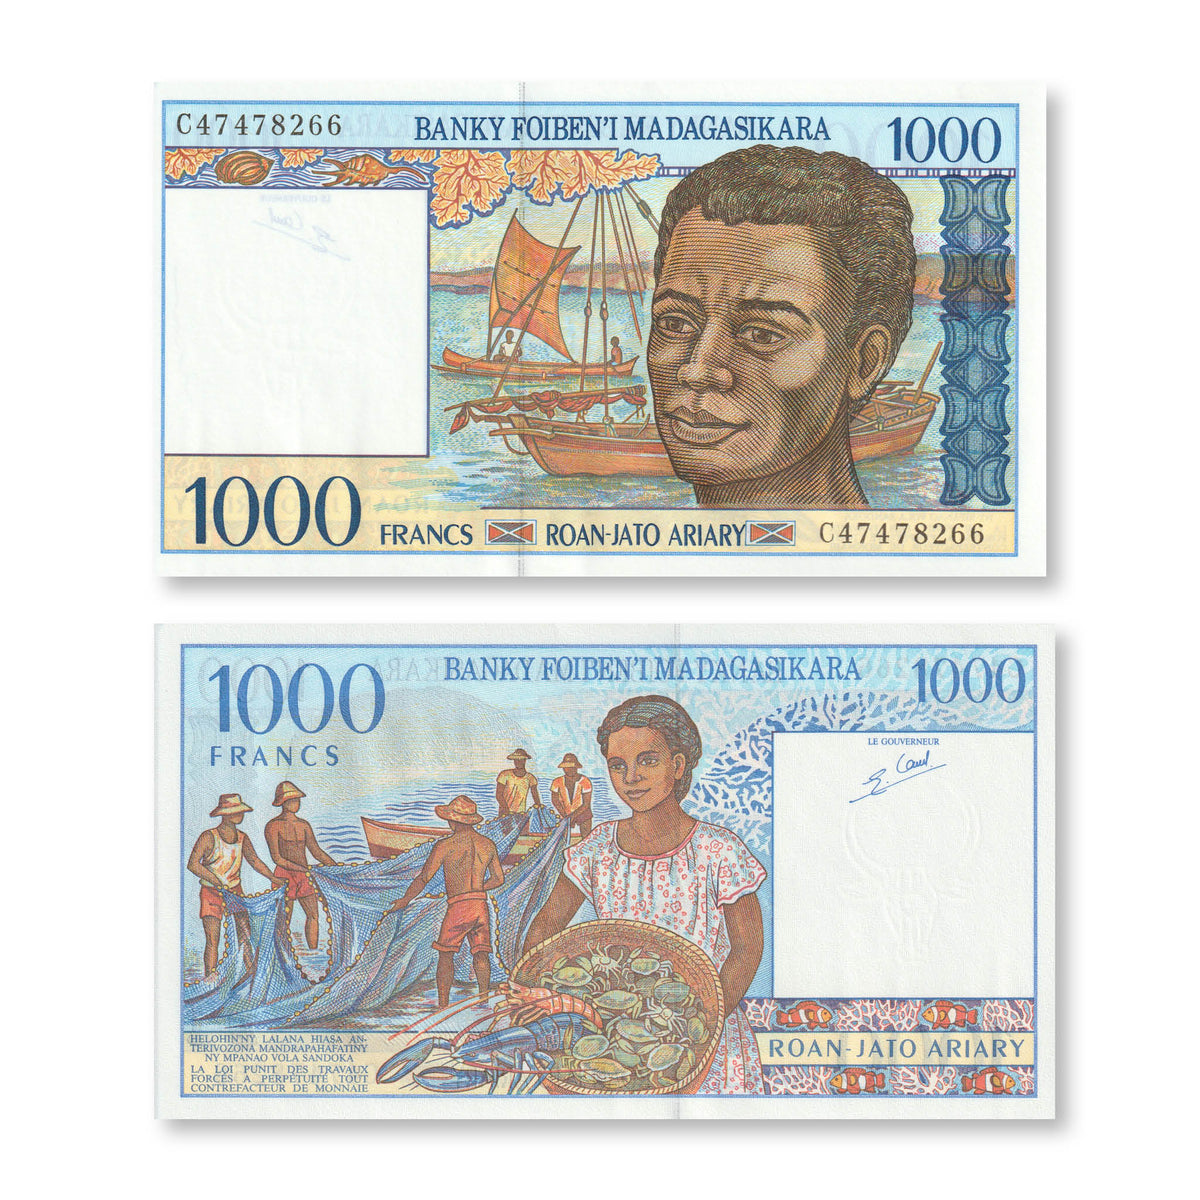 Madagascar 1000 Francs, 1994, B312b, P76b, UNC - Robert's World Money - World Banknotes